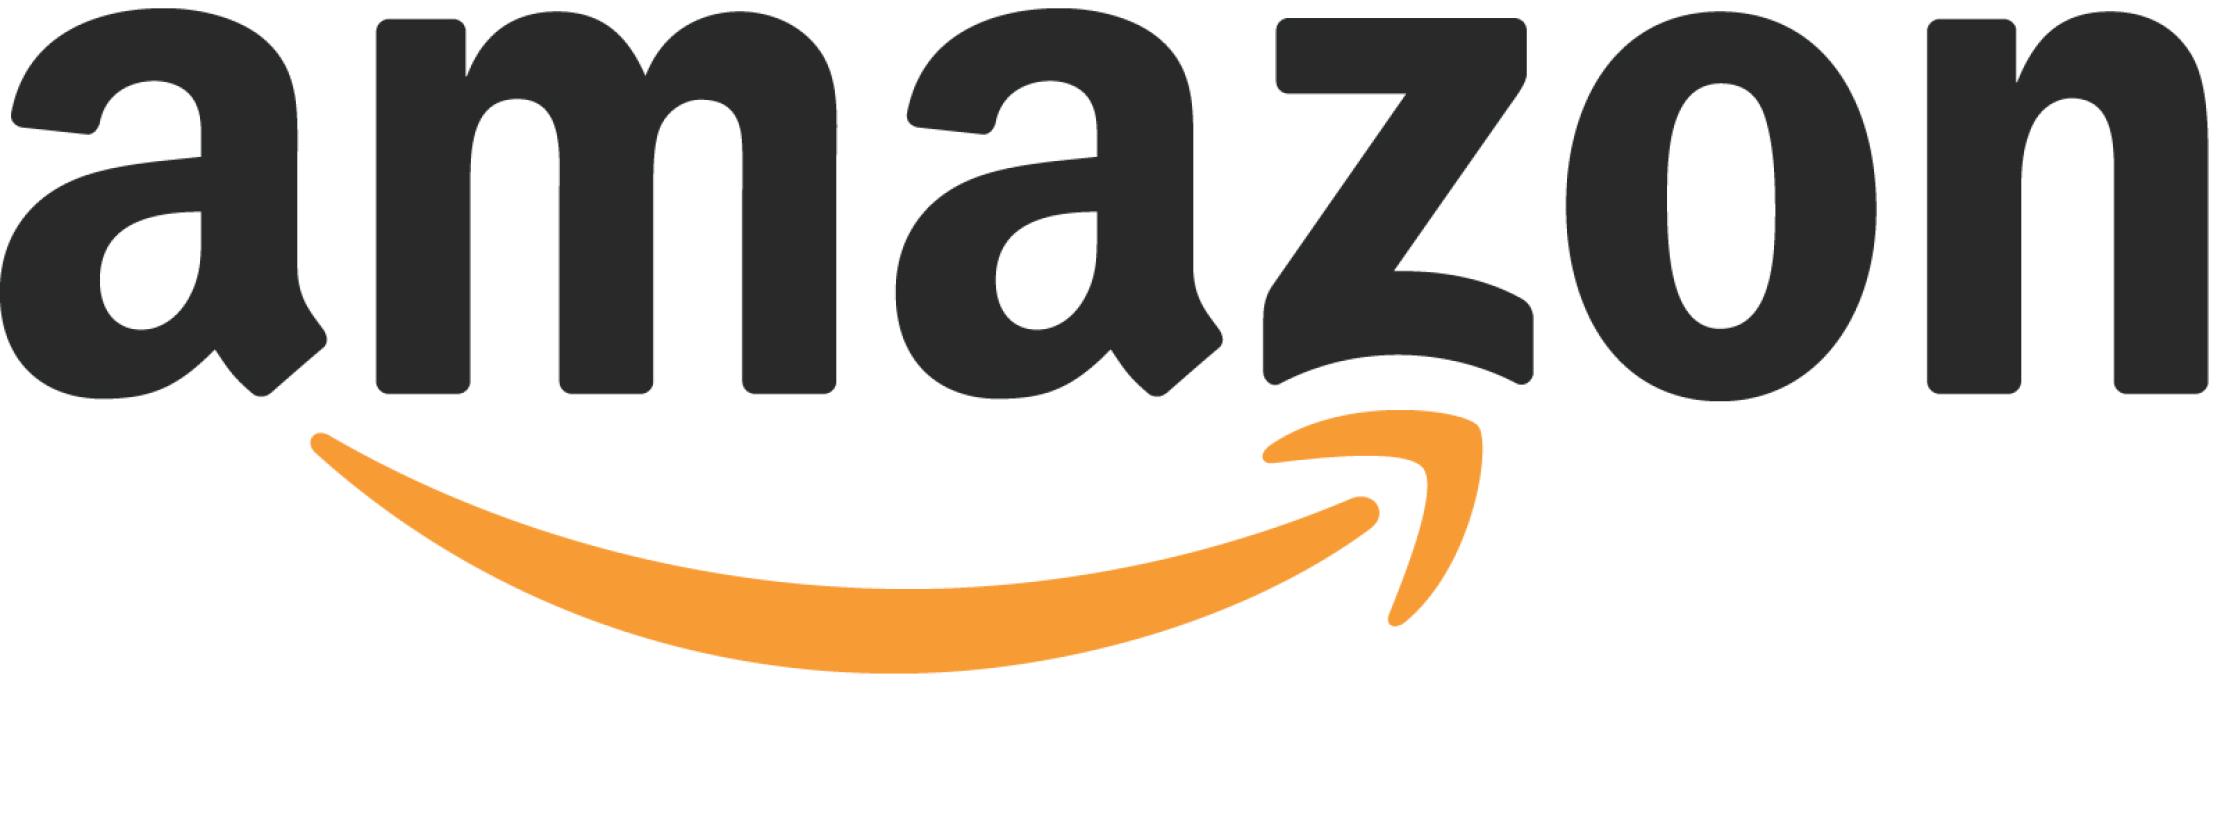 Amazon Icons - Download 38 Free Amazon icons here